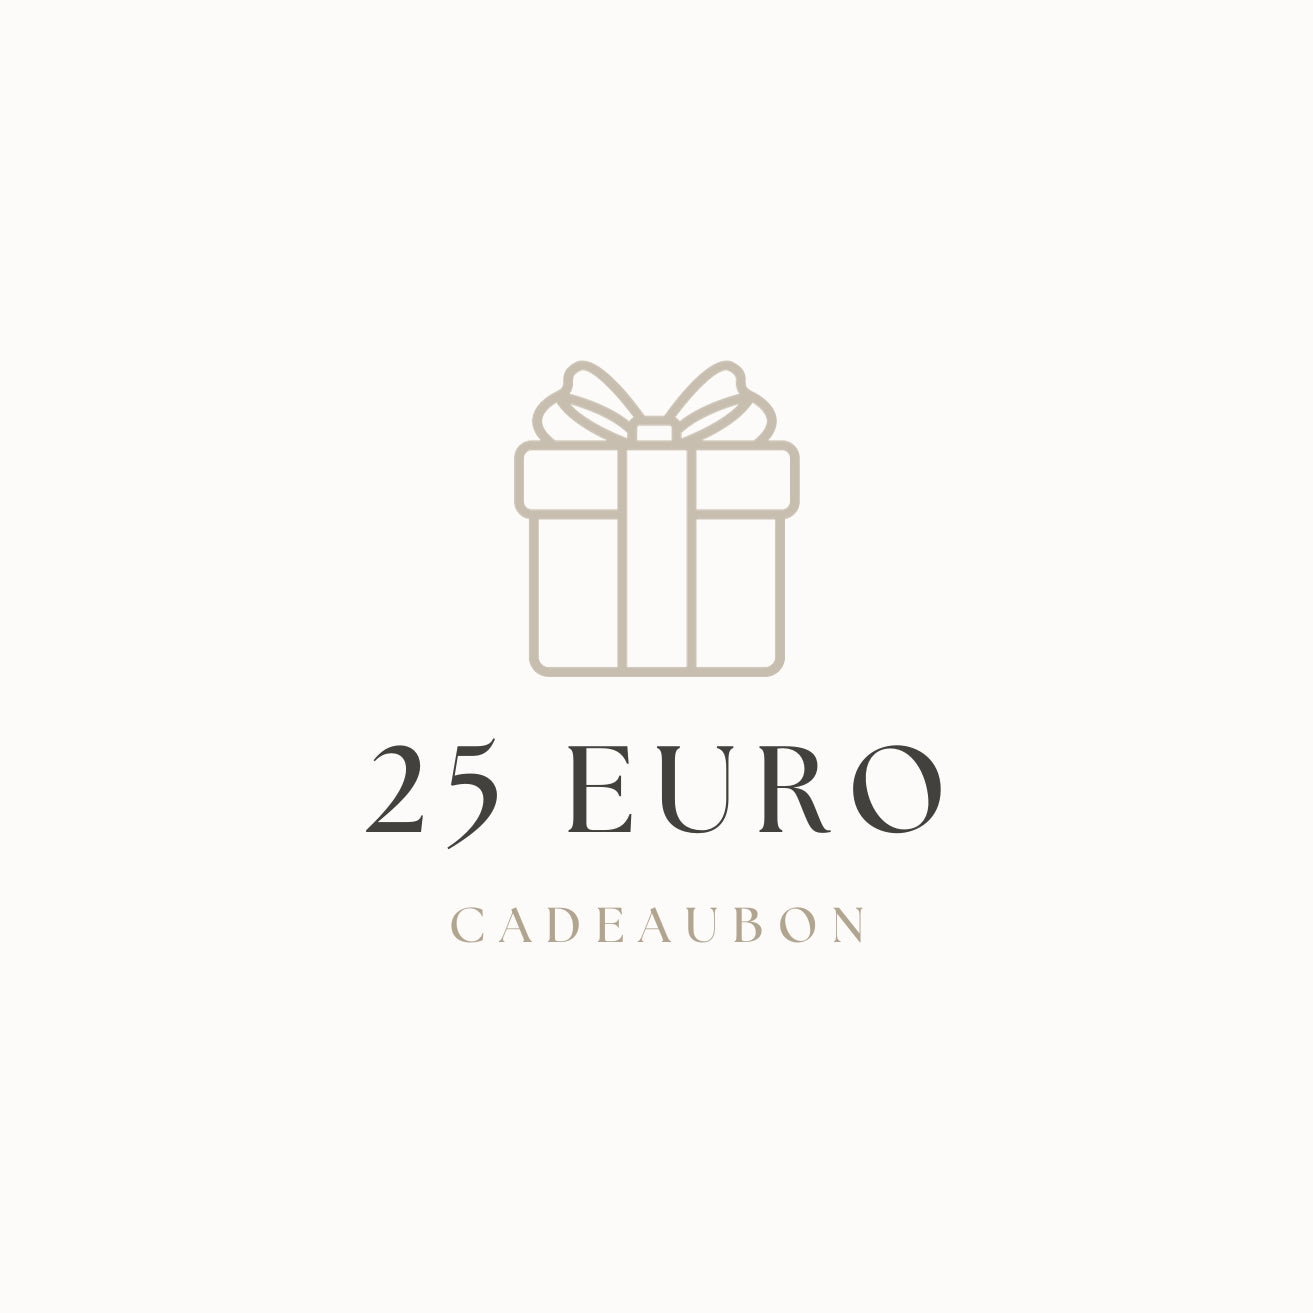 Cadeaubon | 25 euro